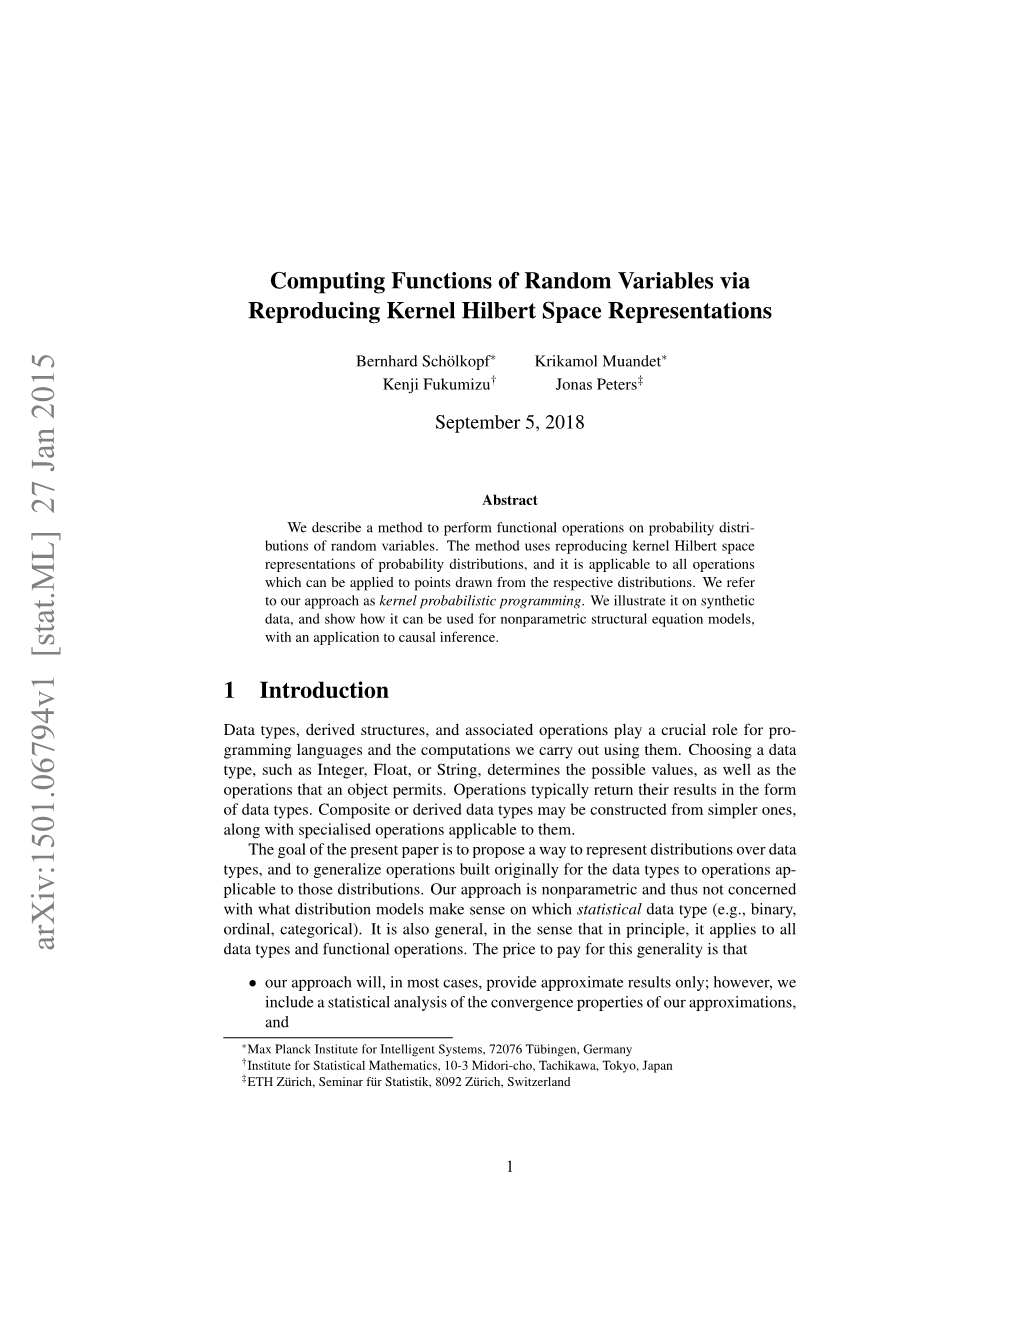 Computing Functions of Random Variables Via Reproducing Kernel Hilbert Space Representations